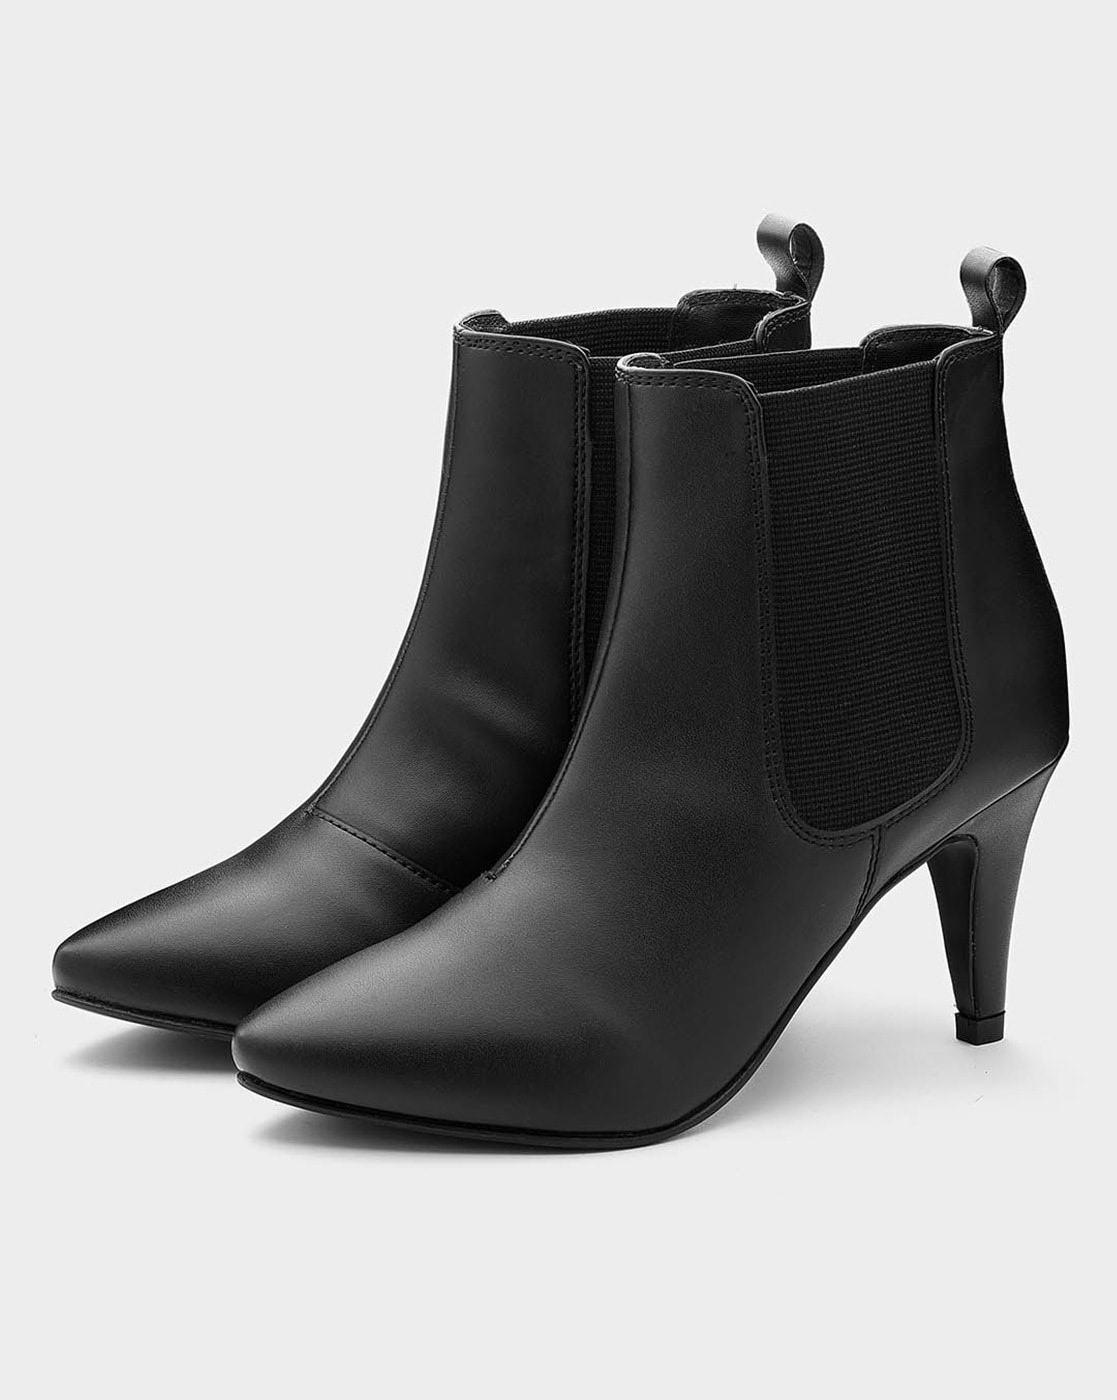 West Vintage Black Leather Ankle Boots | ALOHAS-hkpdtq2012.edu.vn